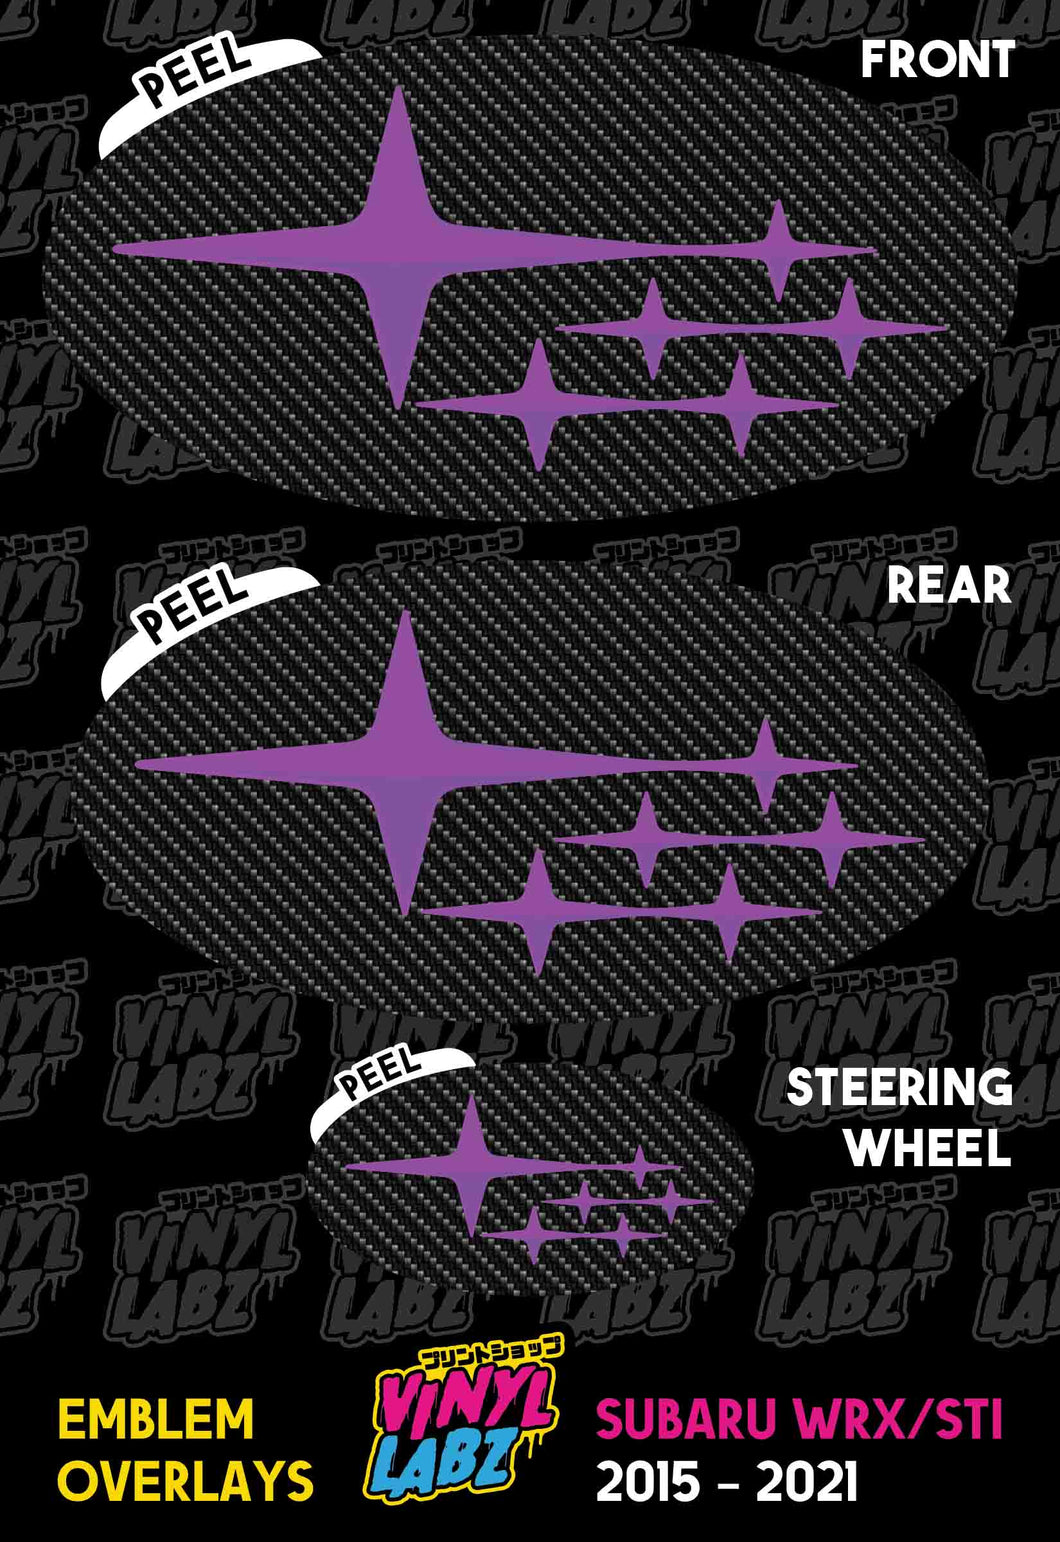 Subaru Vinyl Emblem Overlay (Carbon Fiber and Purple) | 2015-2021 Subaru WRX/STI